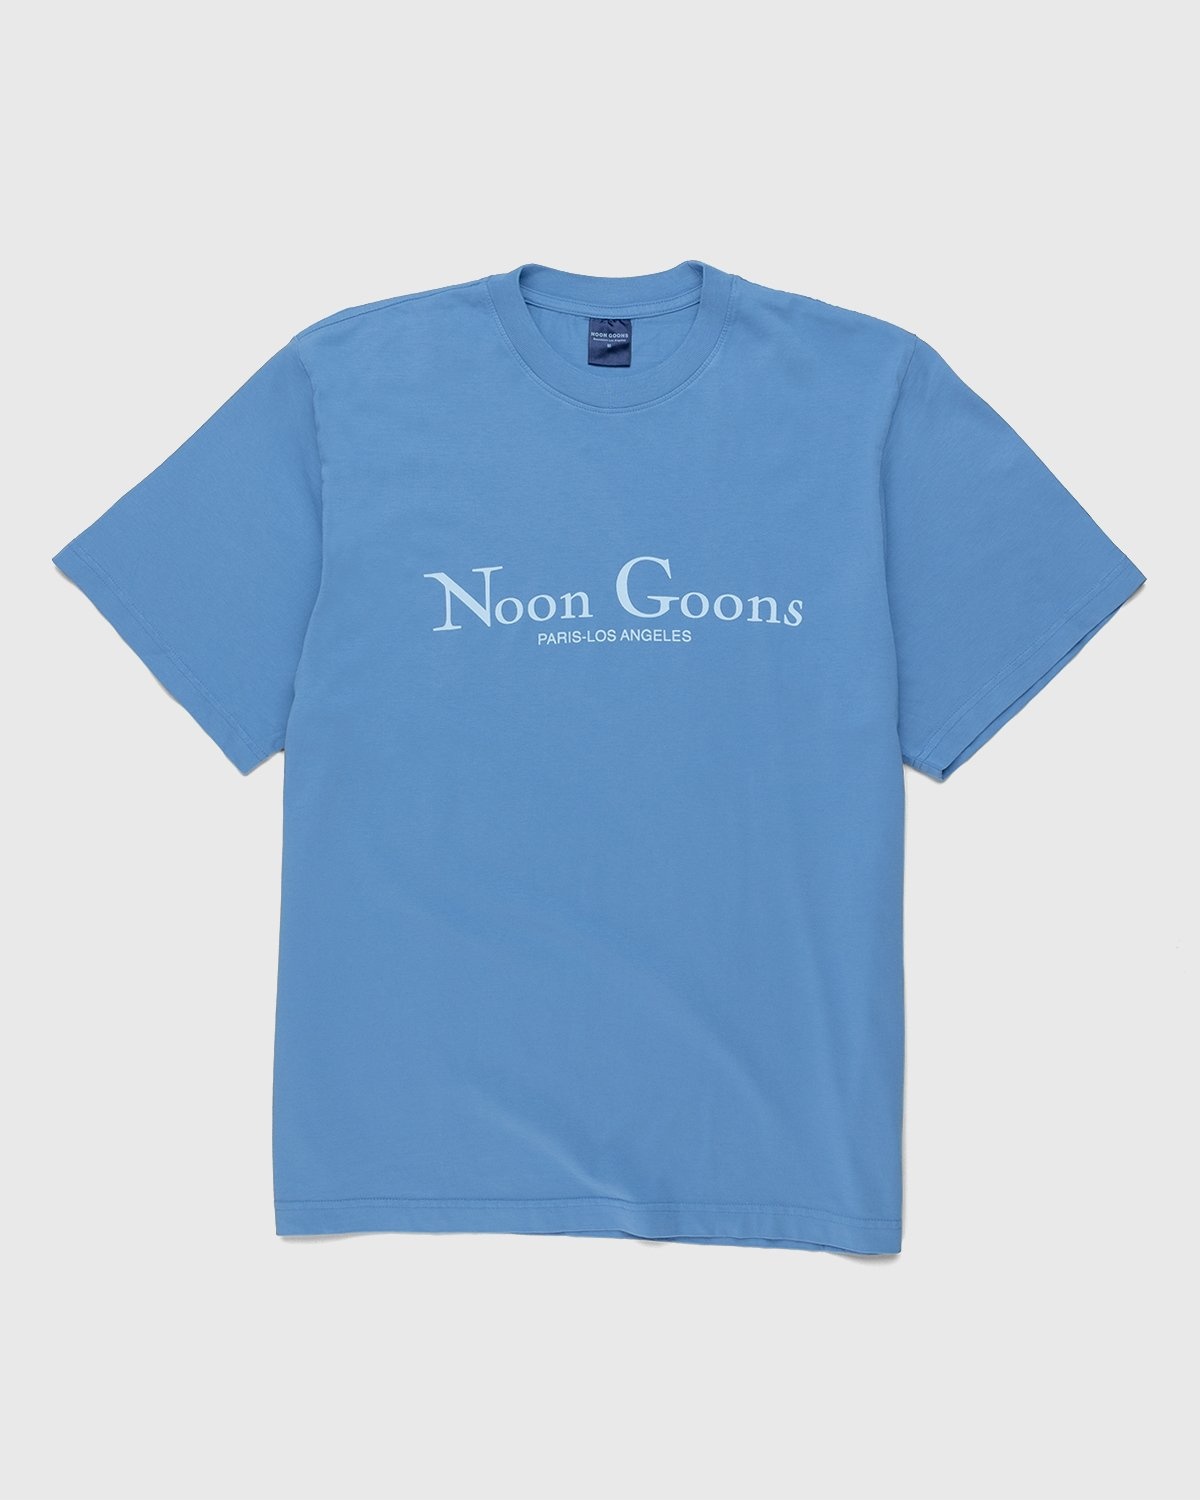 Noon Goons – Sister City T-Shirt Blue - T-Shirts - Blue - Image 1